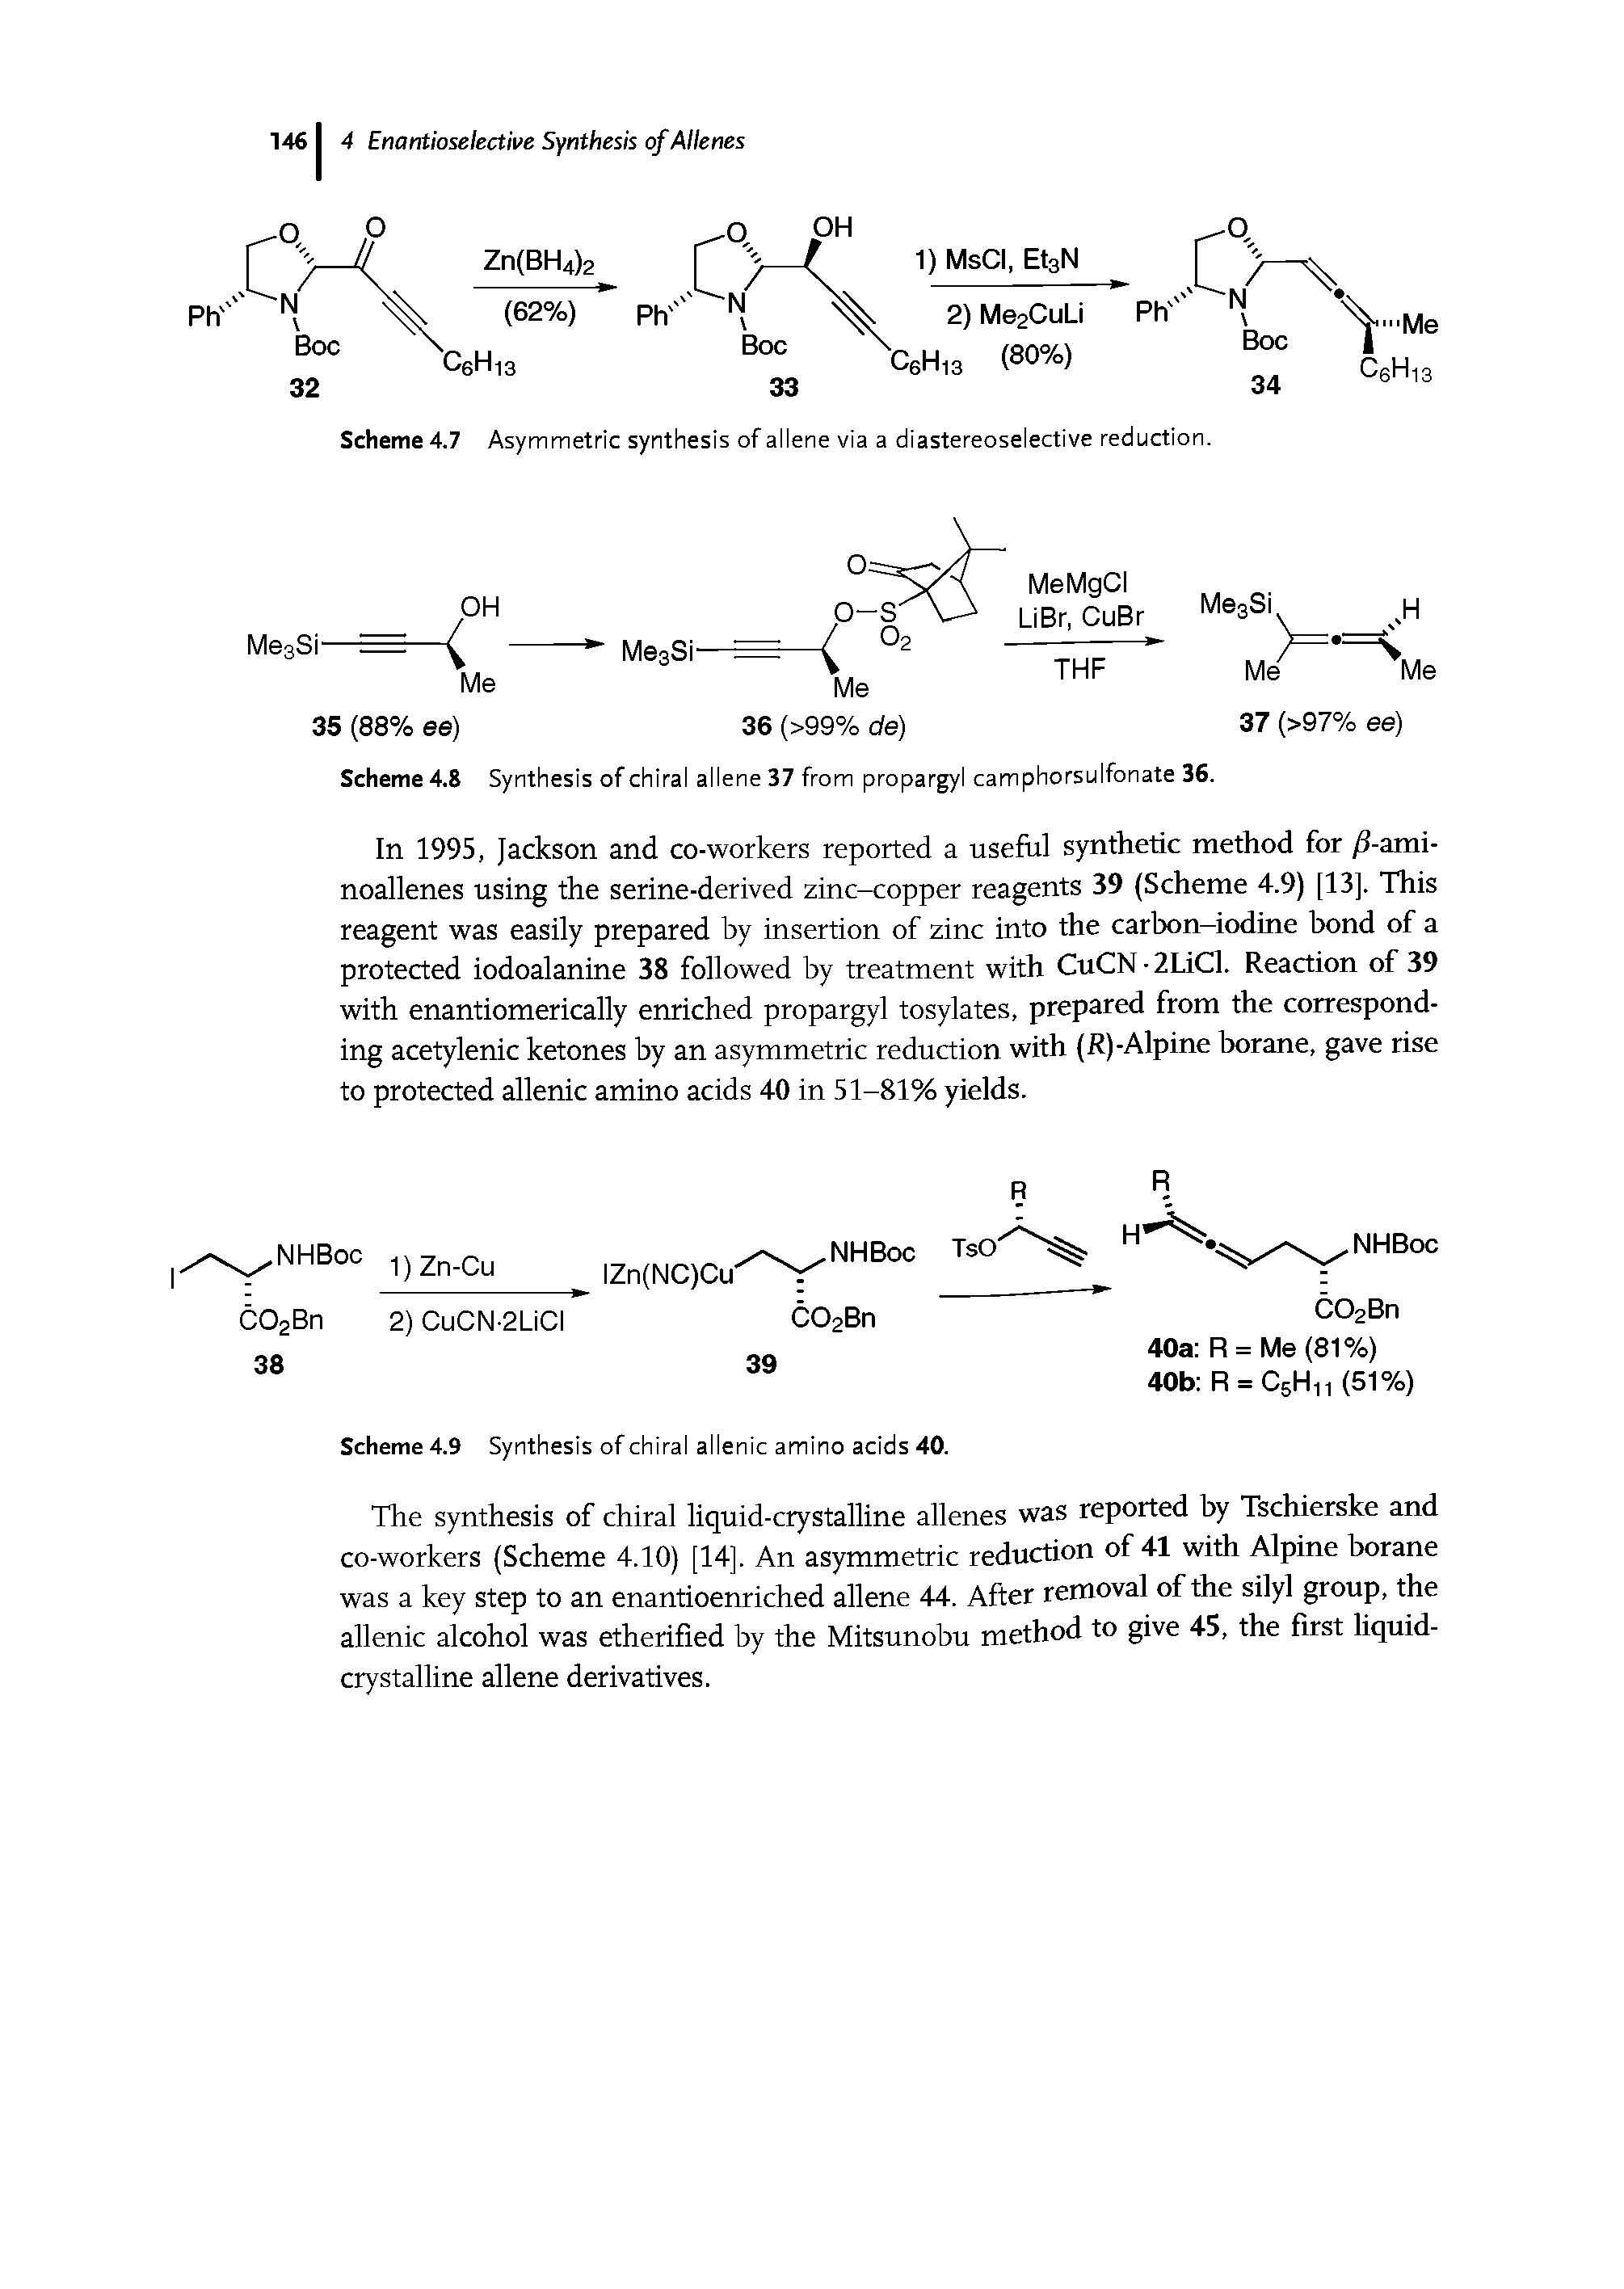 Scheme 4.7 Asymmetric synthesis of allene via a diastereoselective reduction.